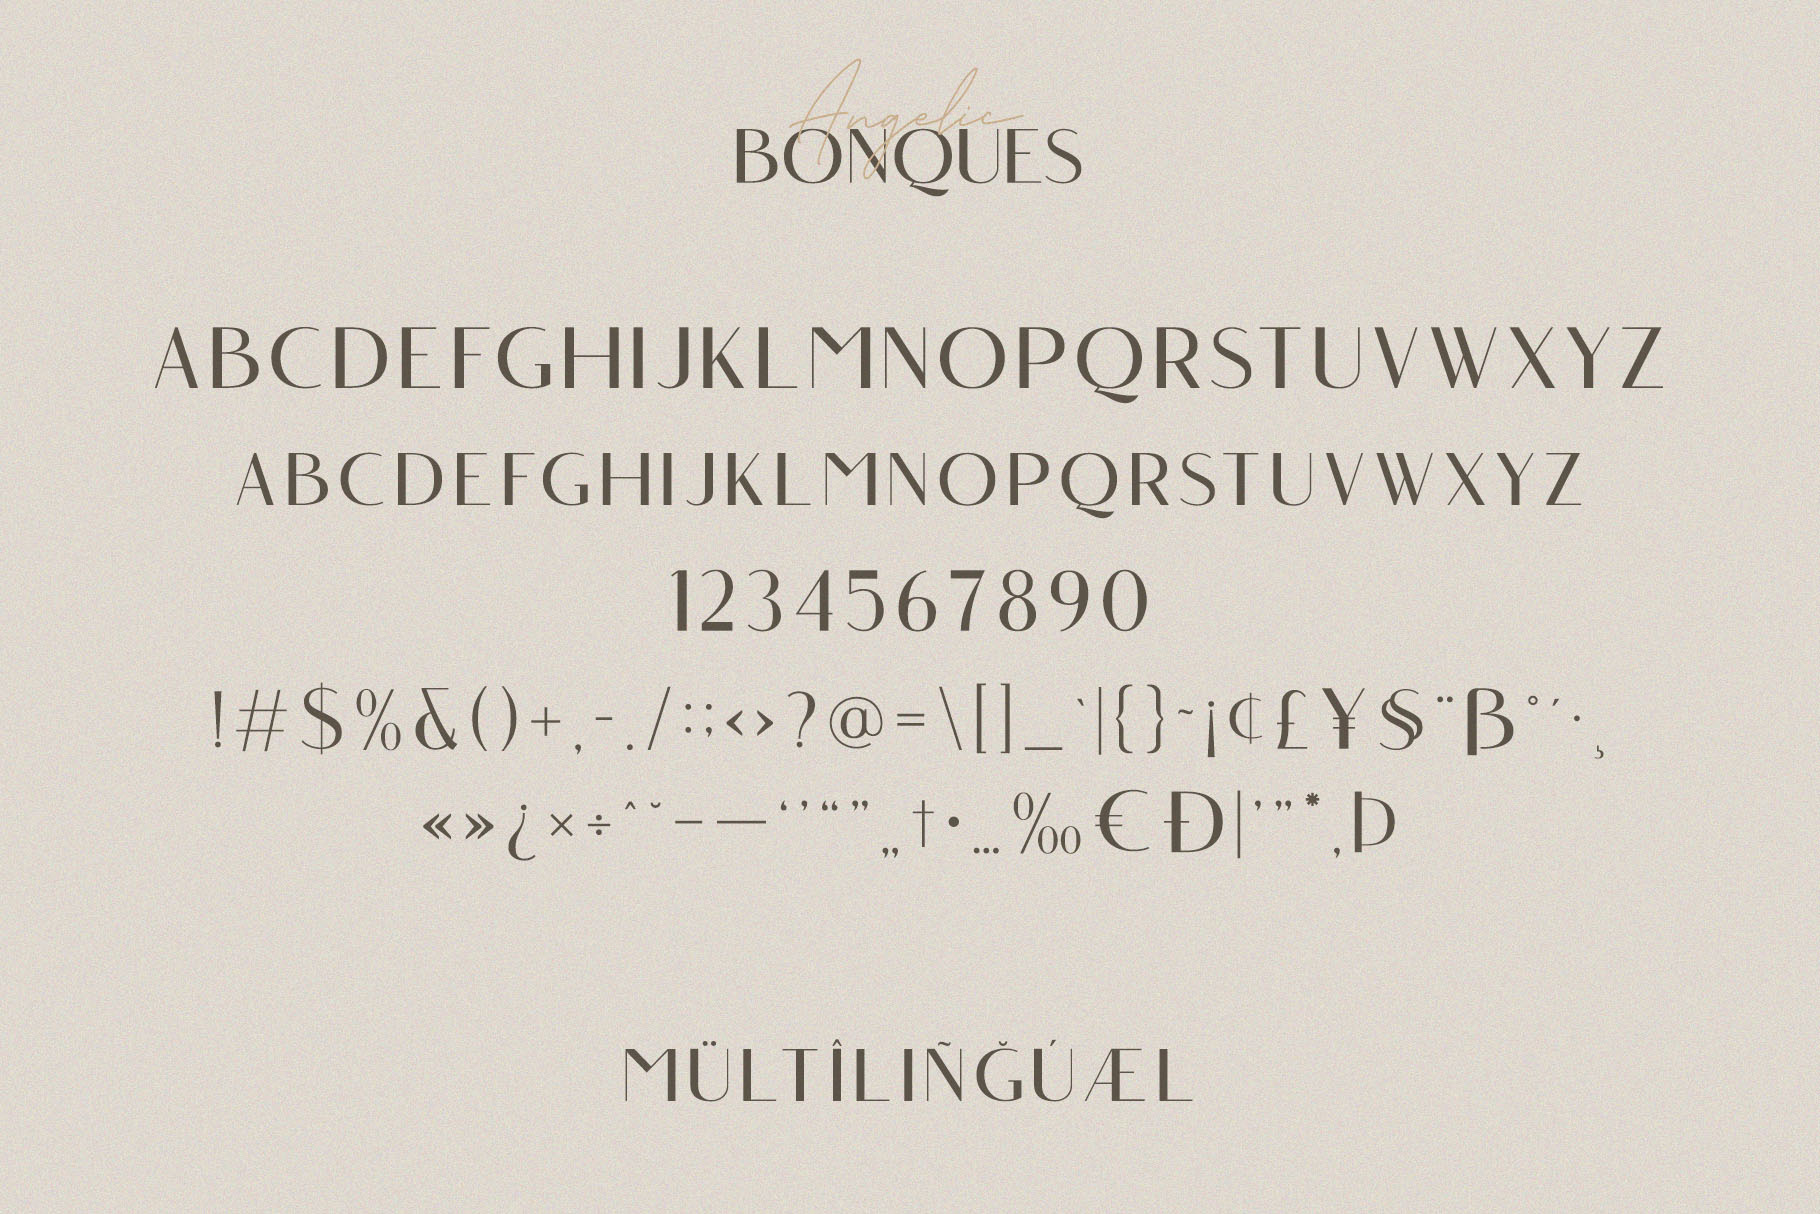 Angelic Bonques Free Sans Italic